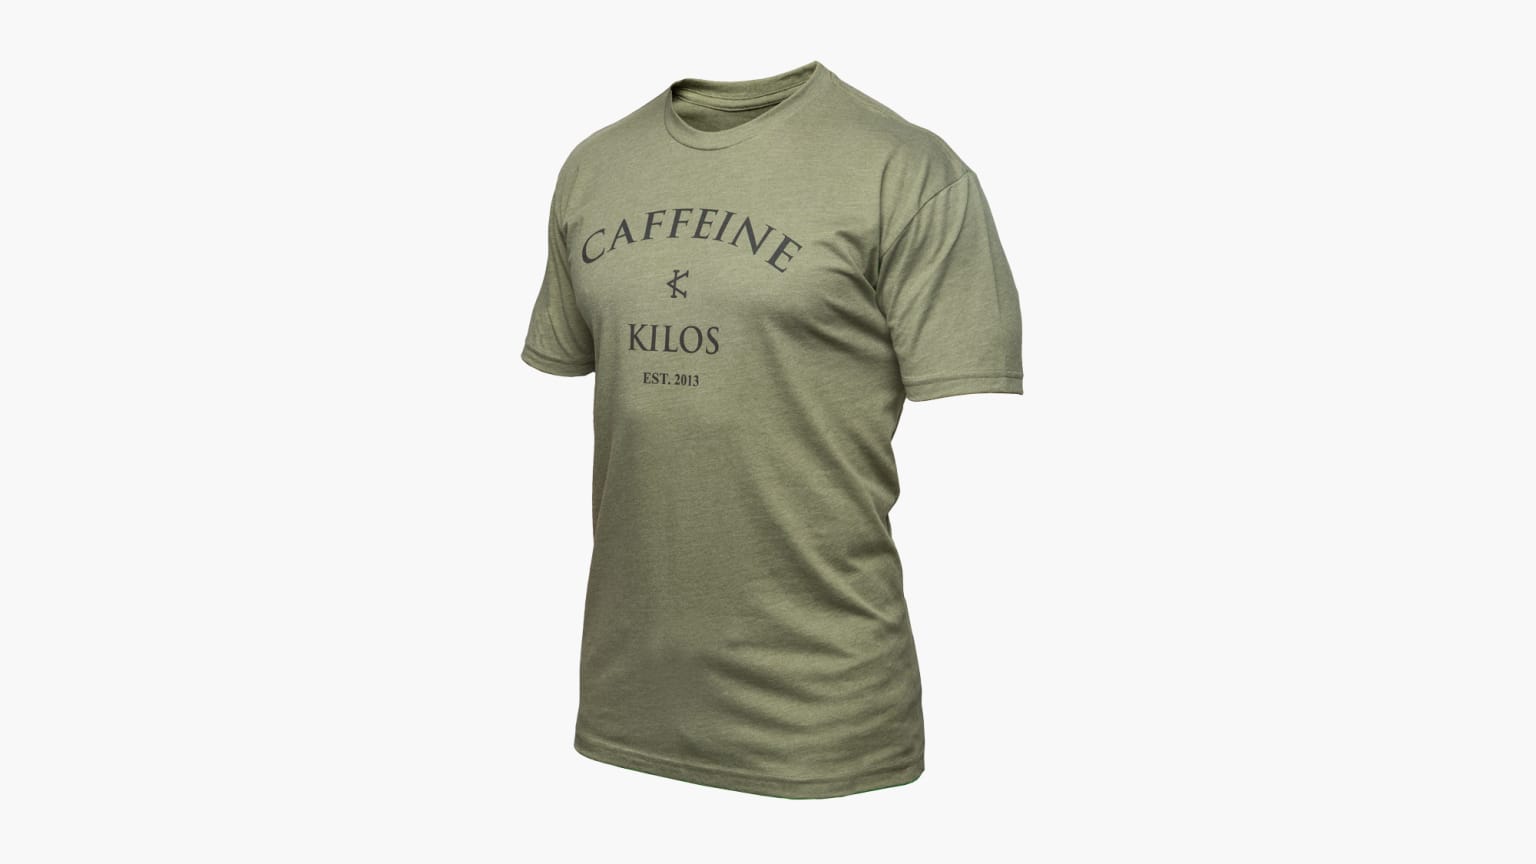 Caffeine & Kilos Standard Issue Shirt - Olive Green | Rogue